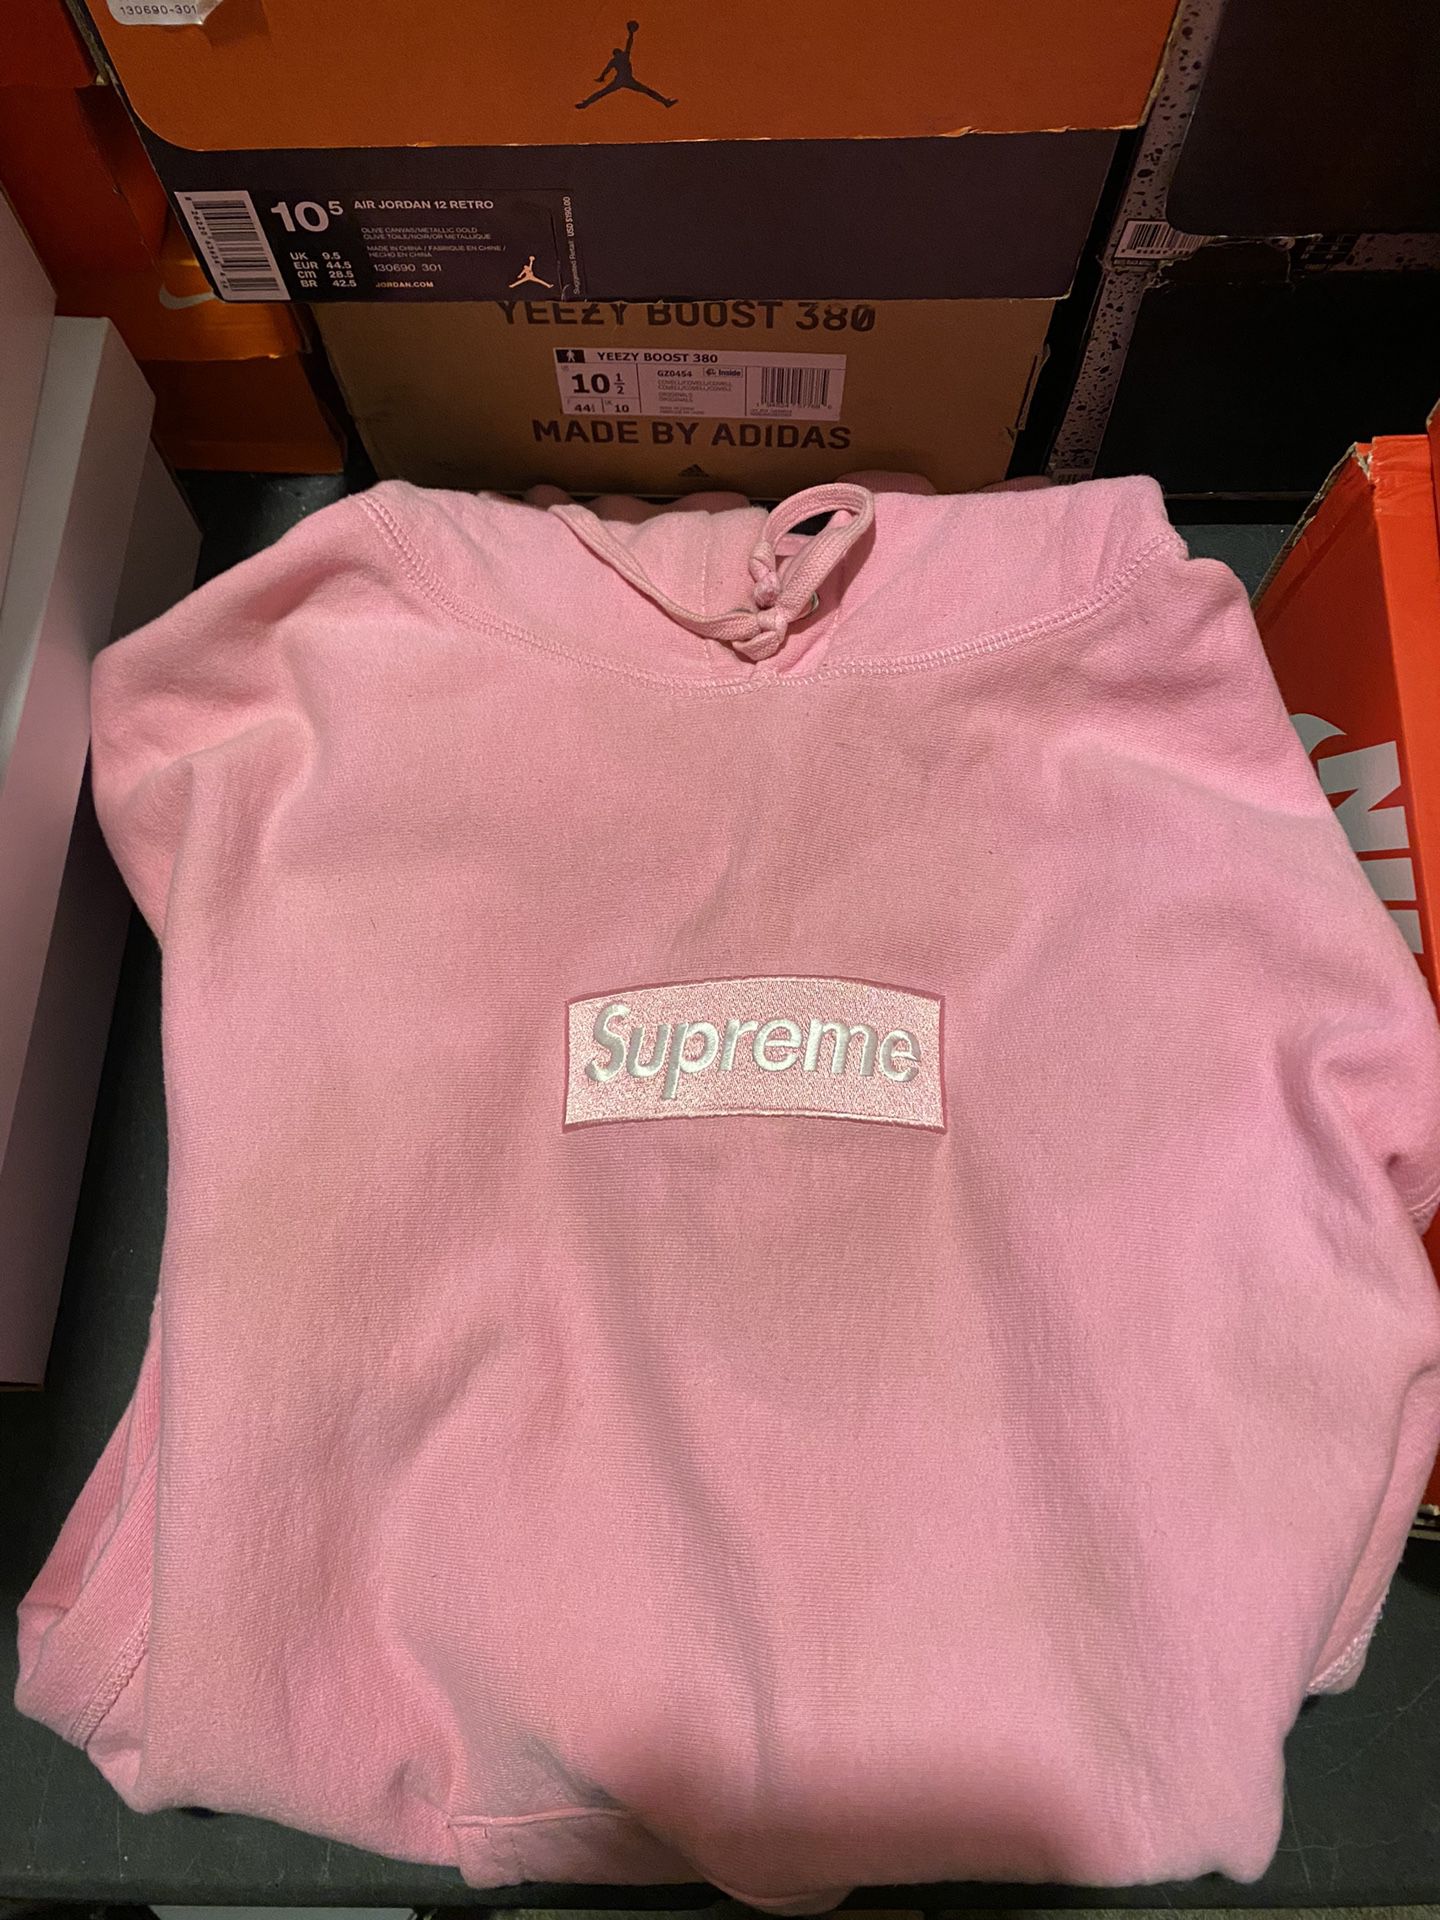 Supreme Pink Box Logo size Medium USED But Clean